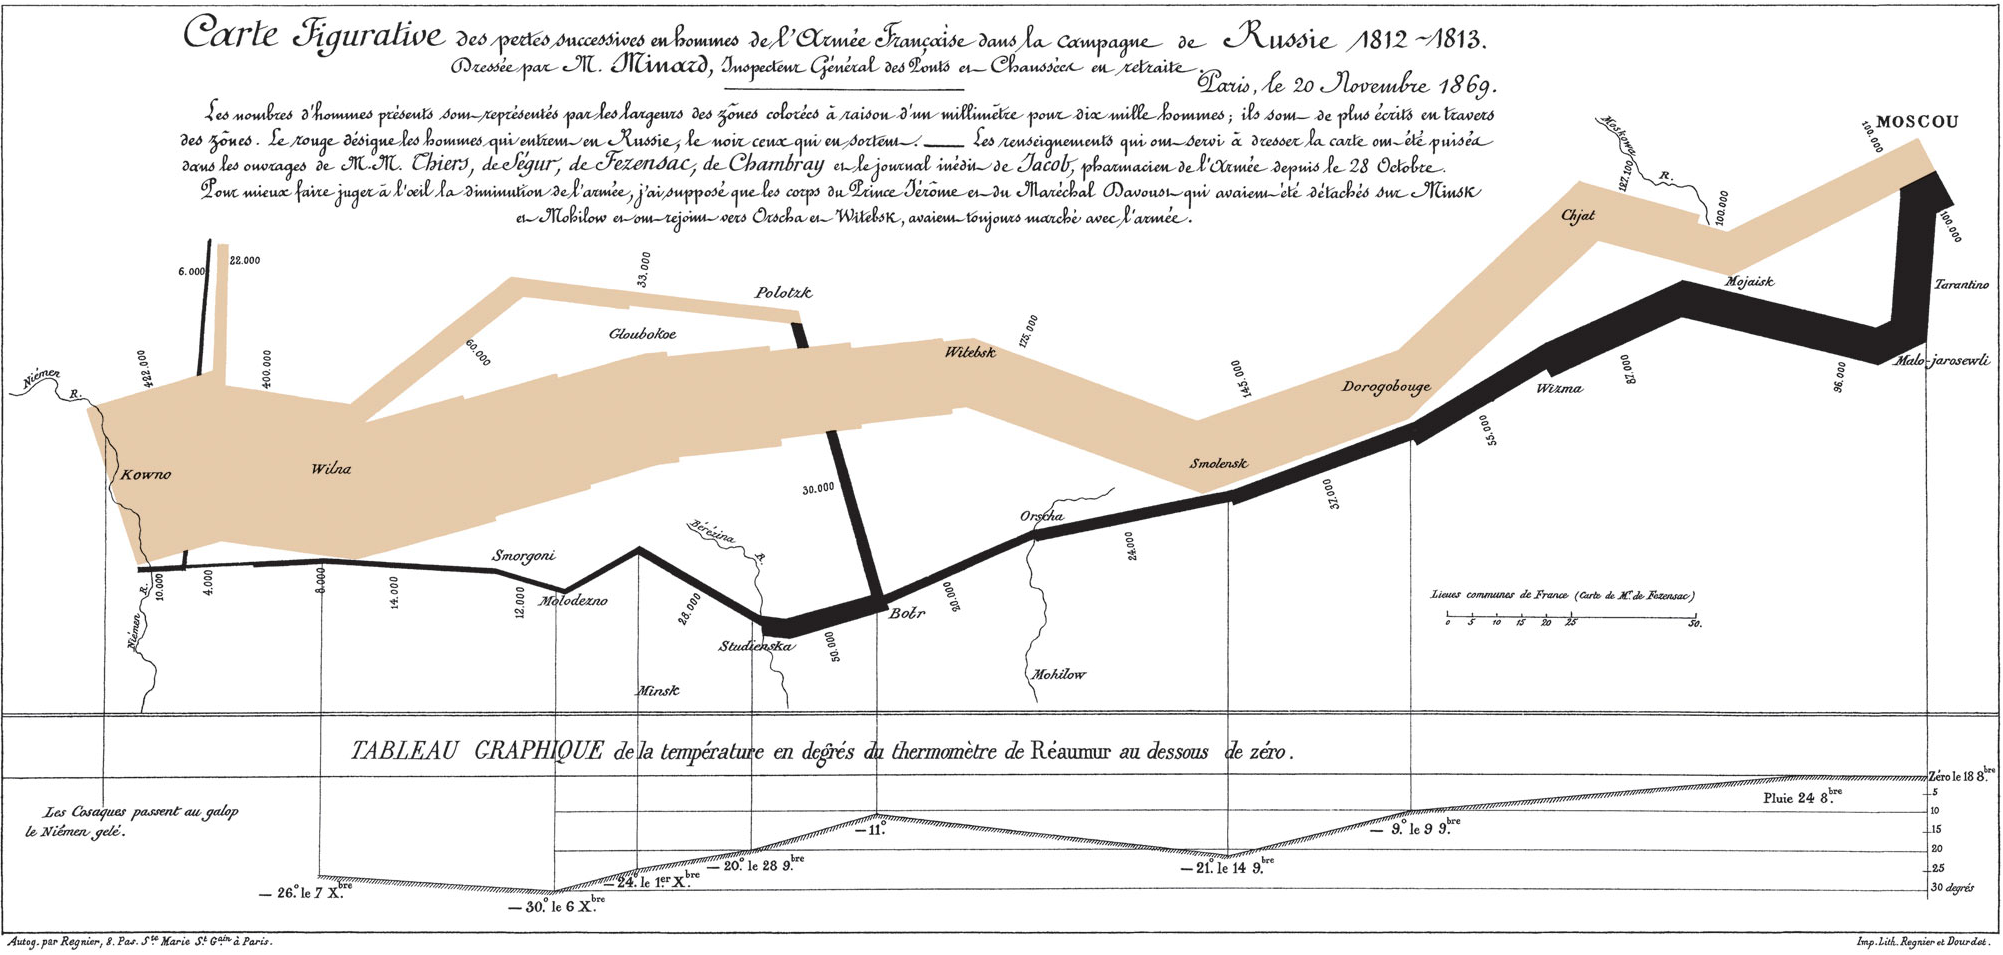 Minard's flow map of Napoleon's March